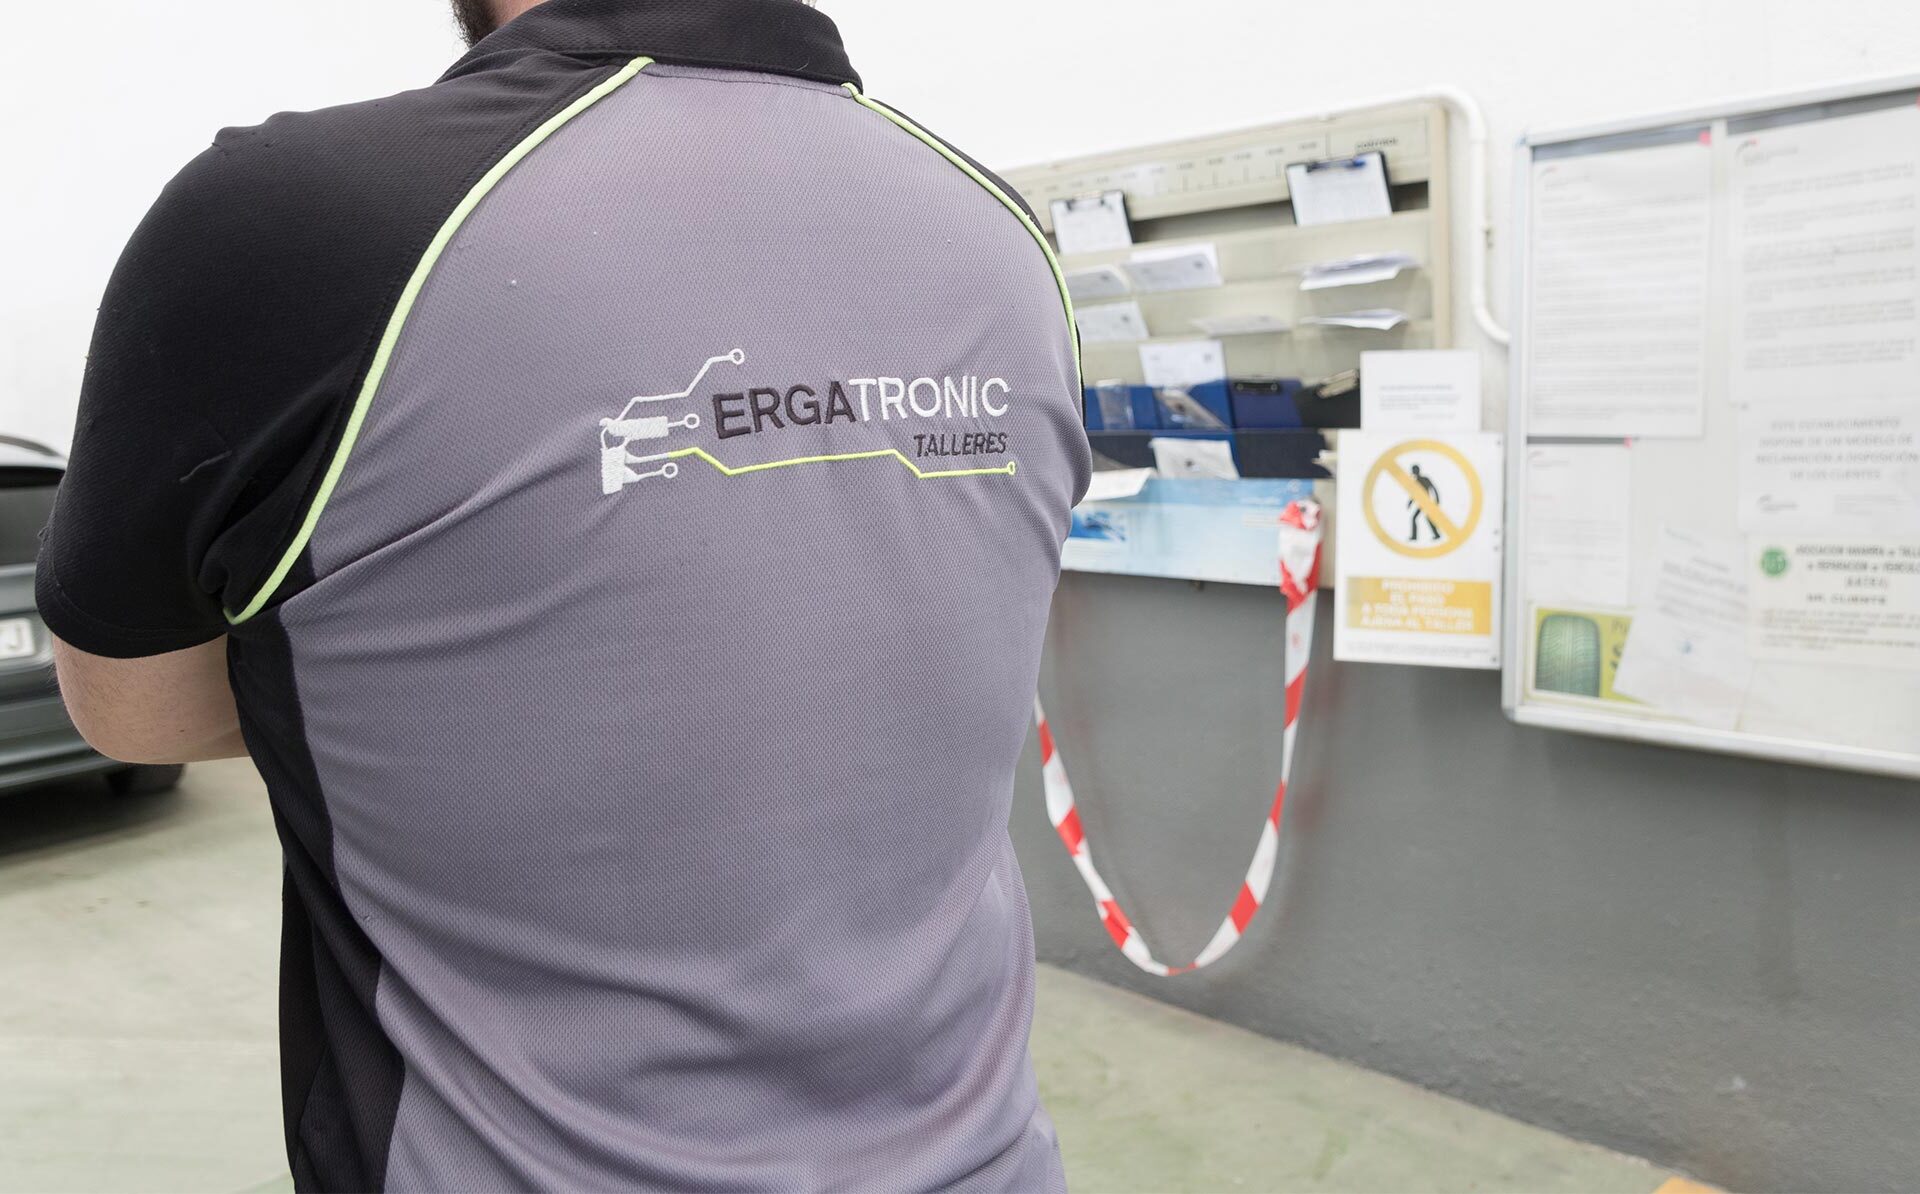 Un mecánico de Ergatronic mostrando su camiseta rotulada